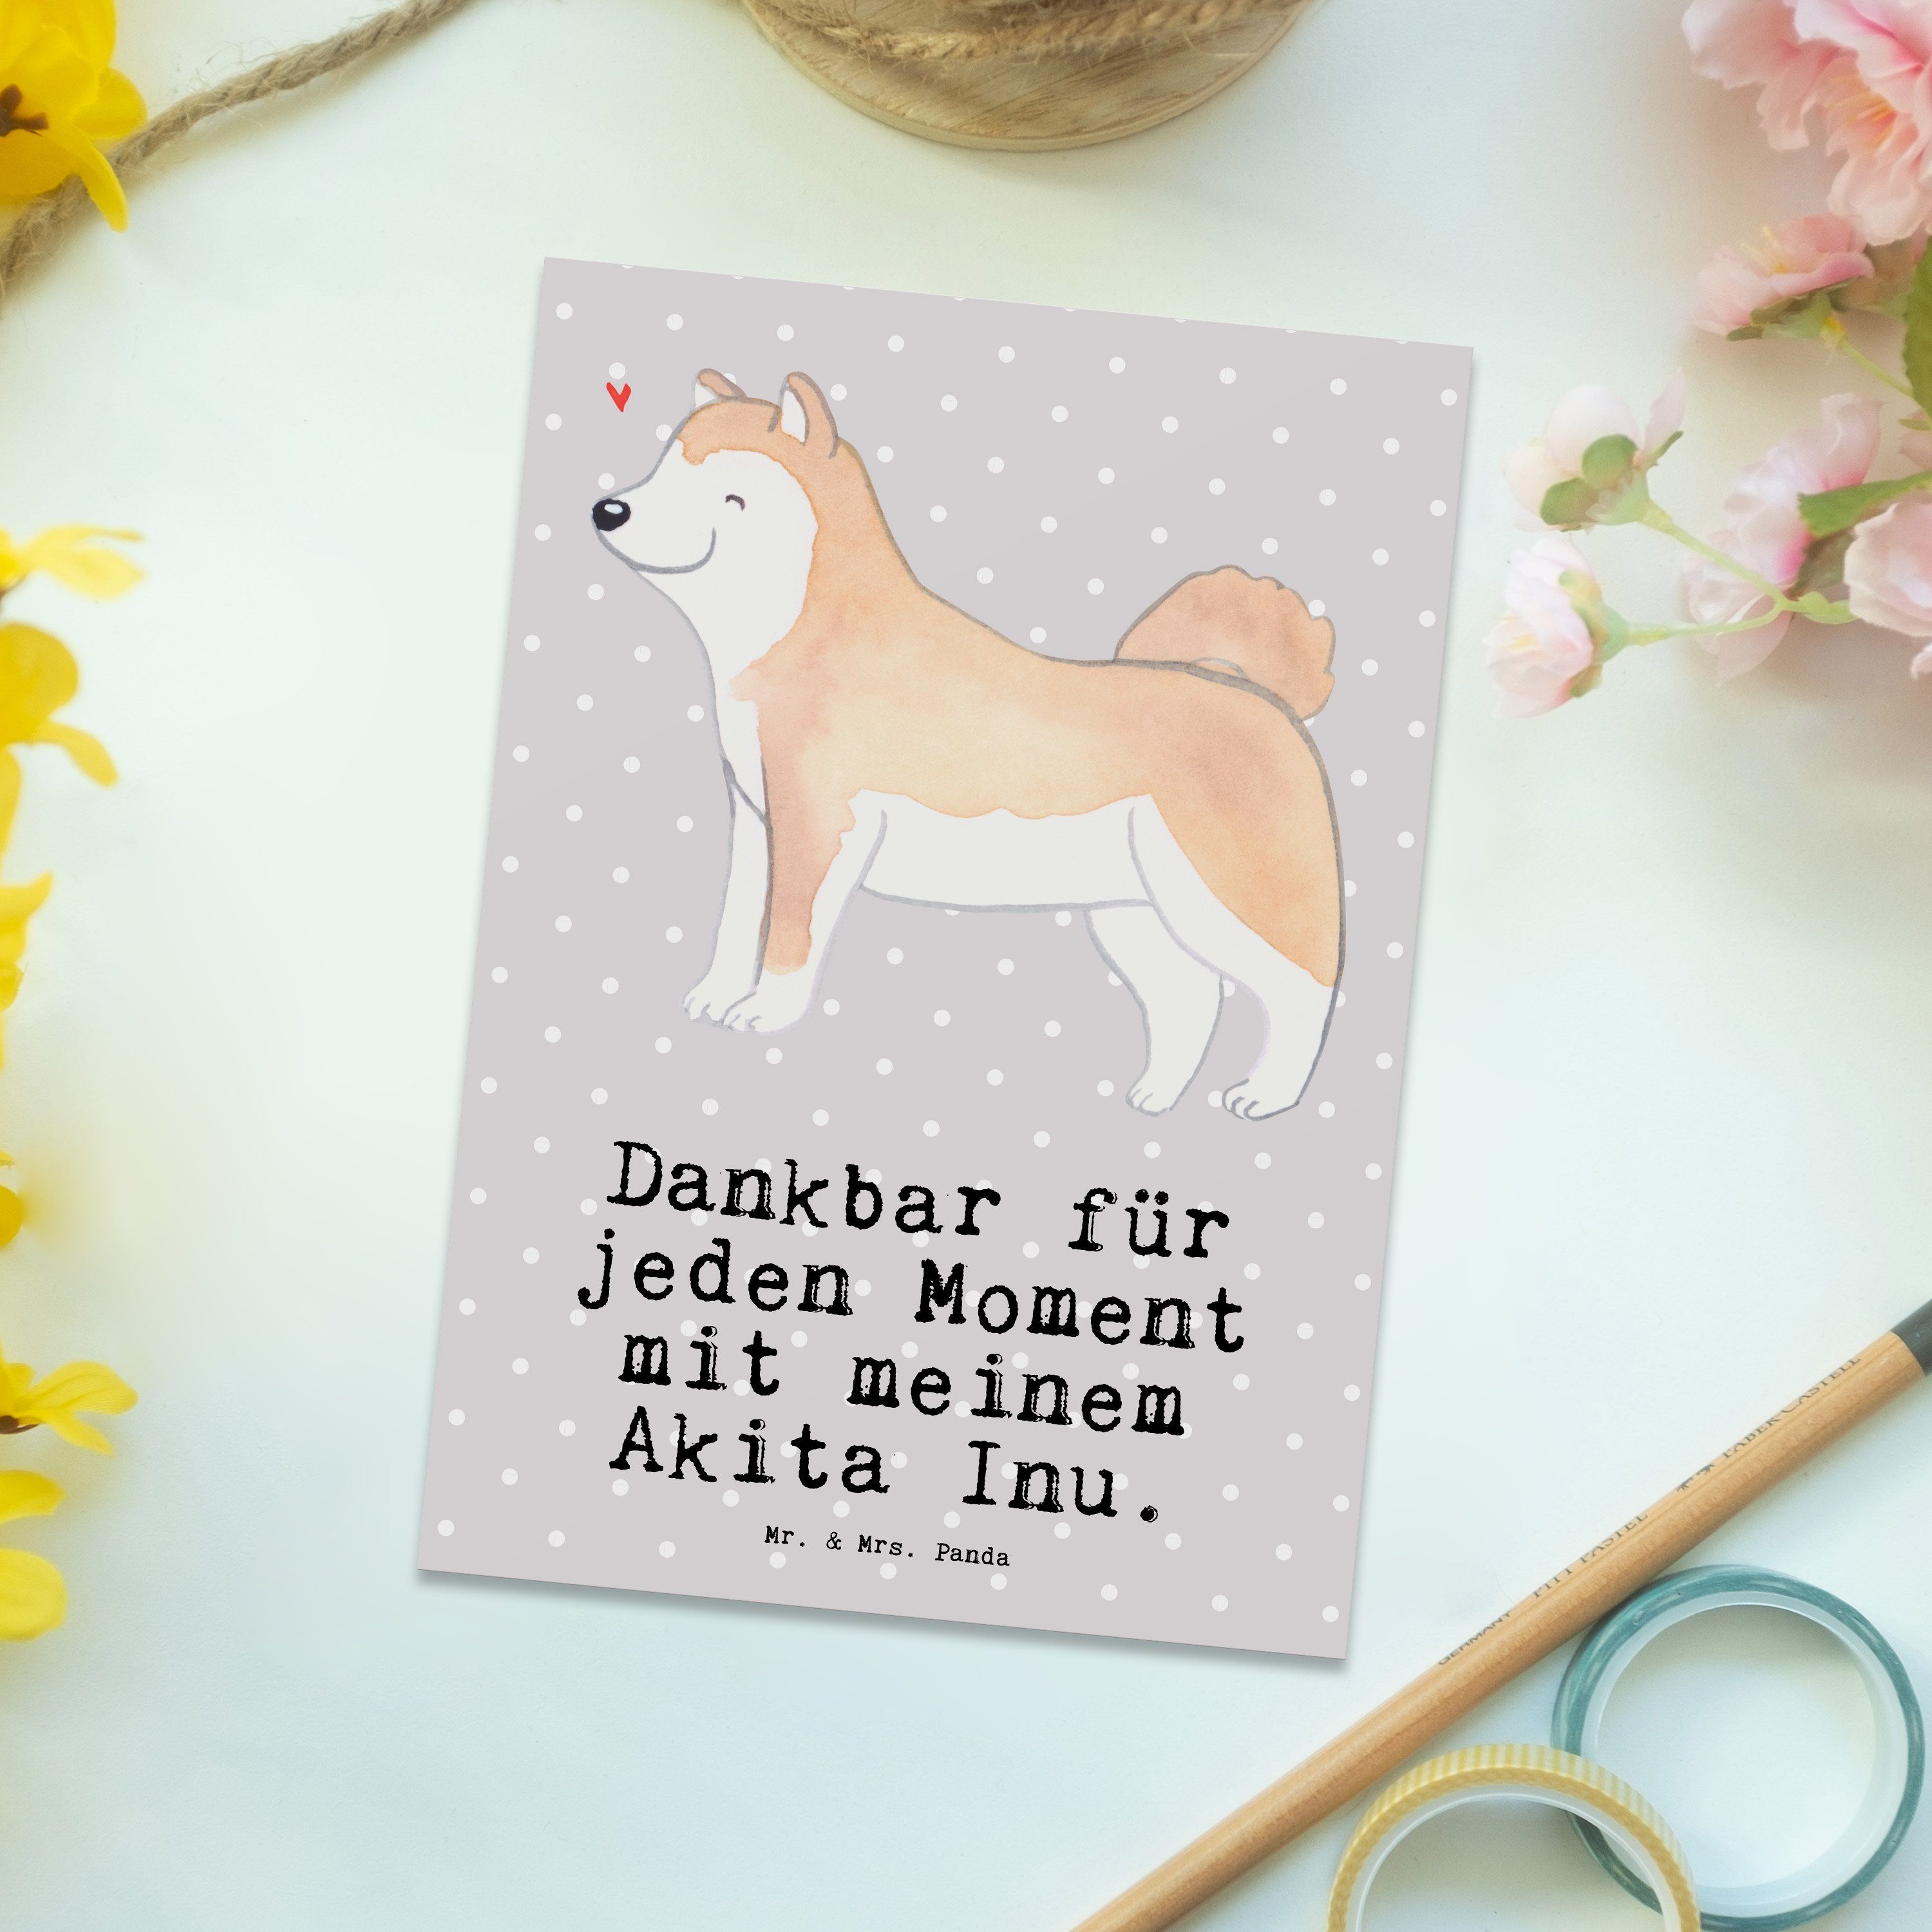 Mr. & Mrs. Panda Hund, Pastell Grau Ansichtskarte, Akita - - Inu Geschenk, Hund Moment Postkarte